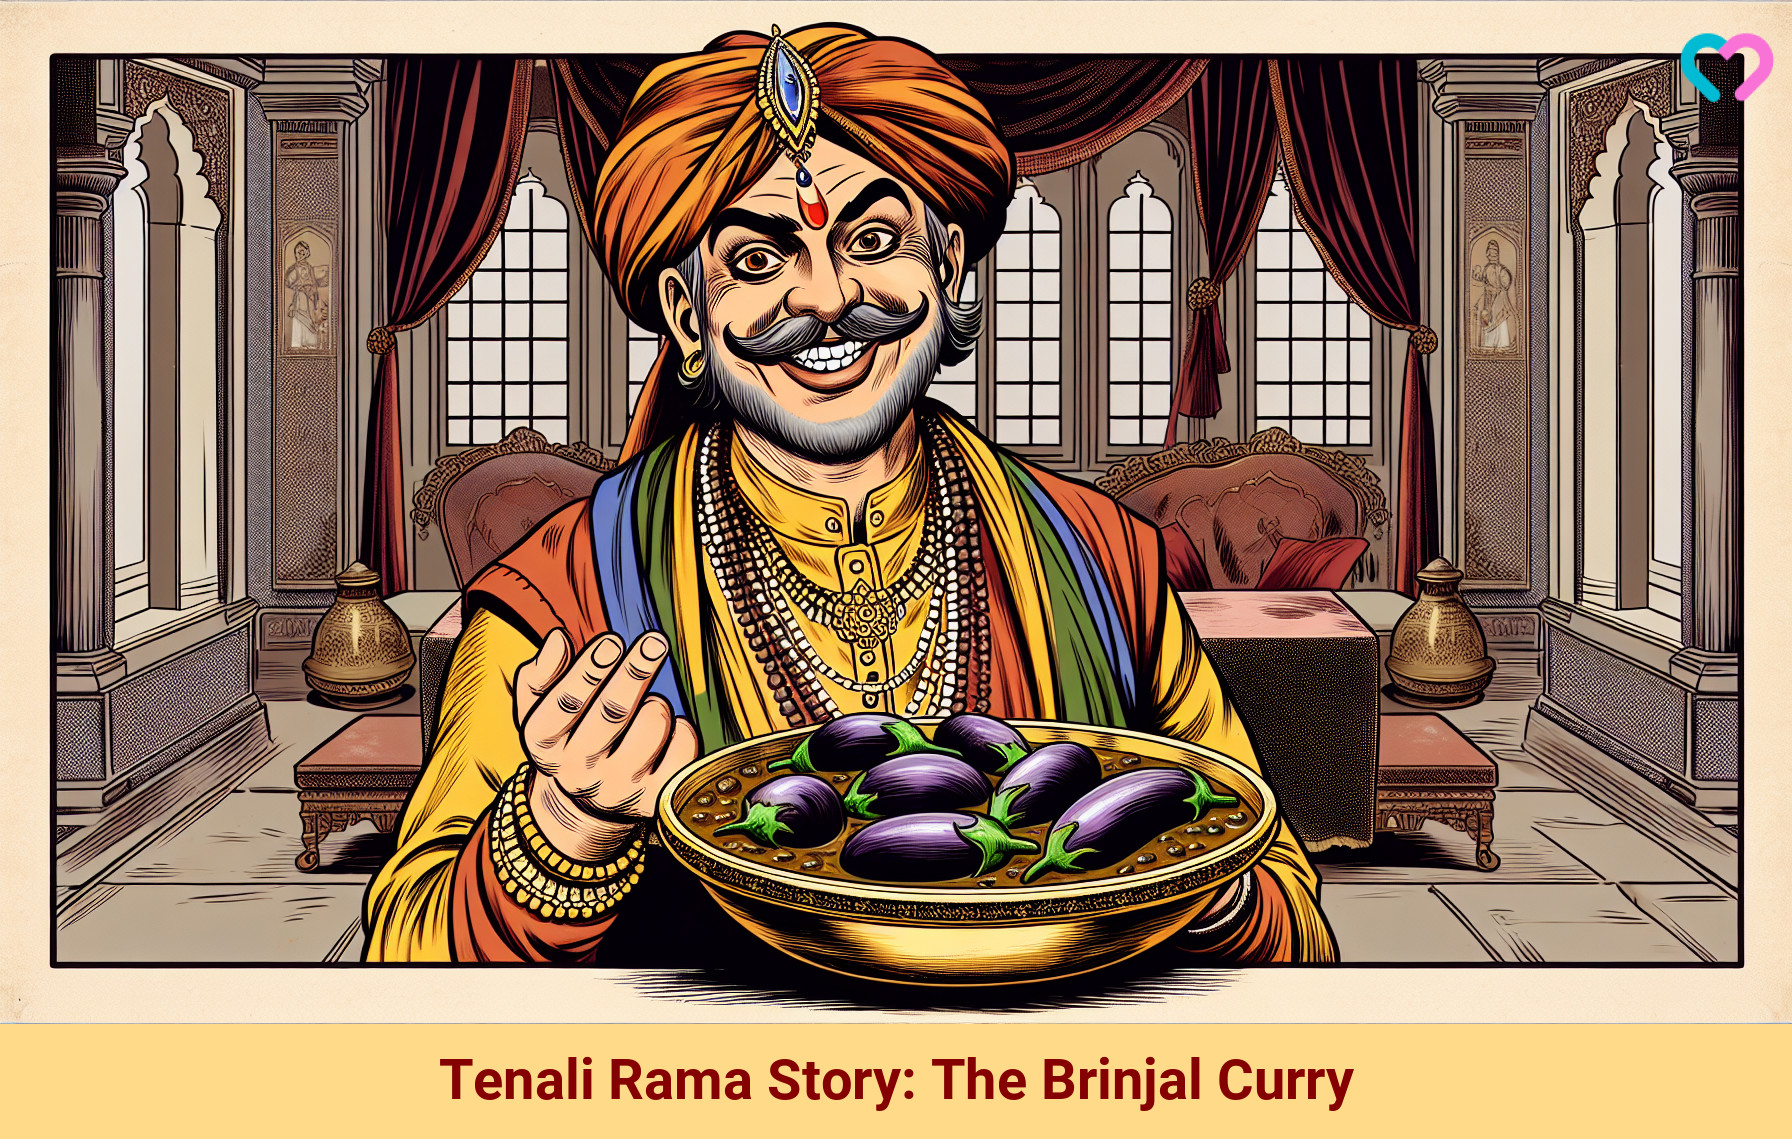 Tenali Rama and Brinjal Curry_illustration